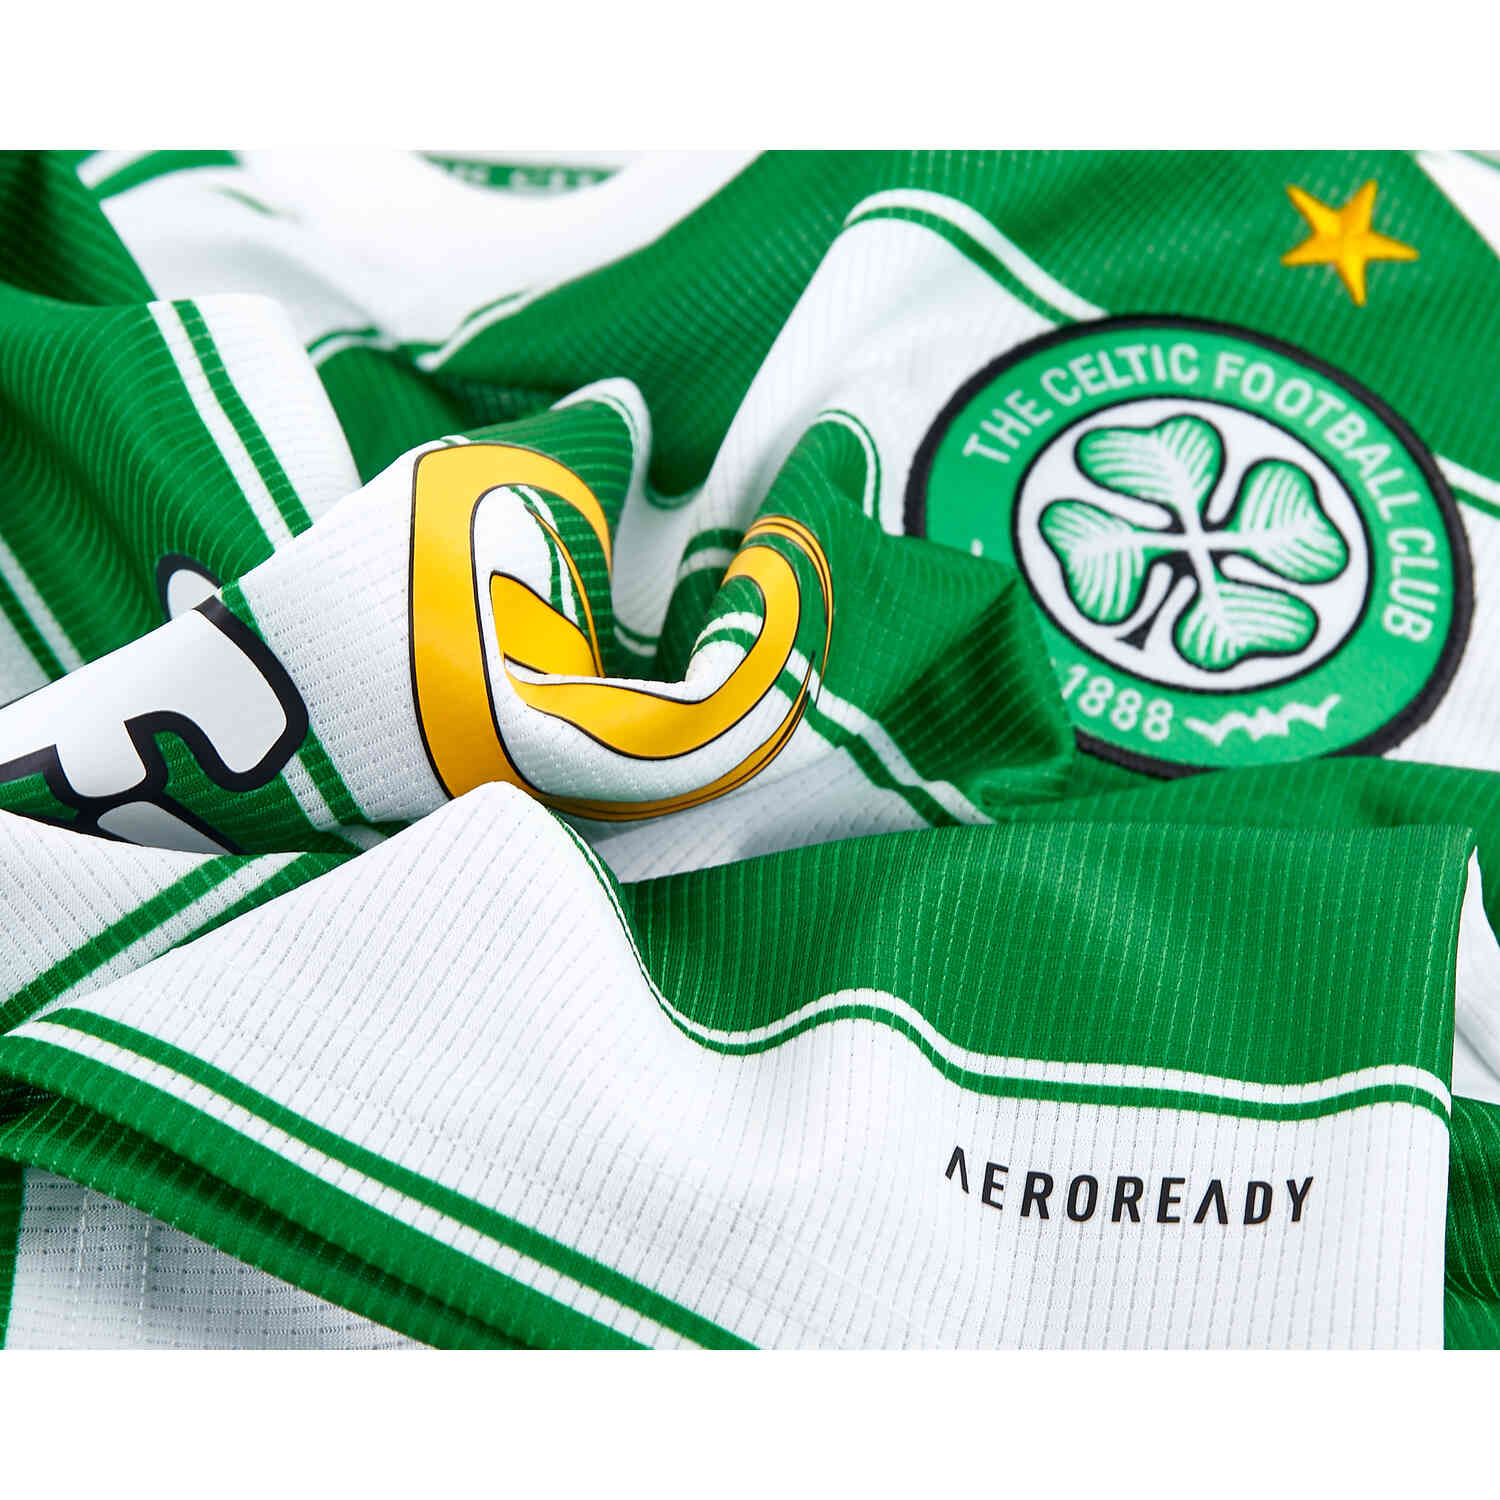 adidas Celtic FC 21/22 Home Jersey - White, Kids' Soccer